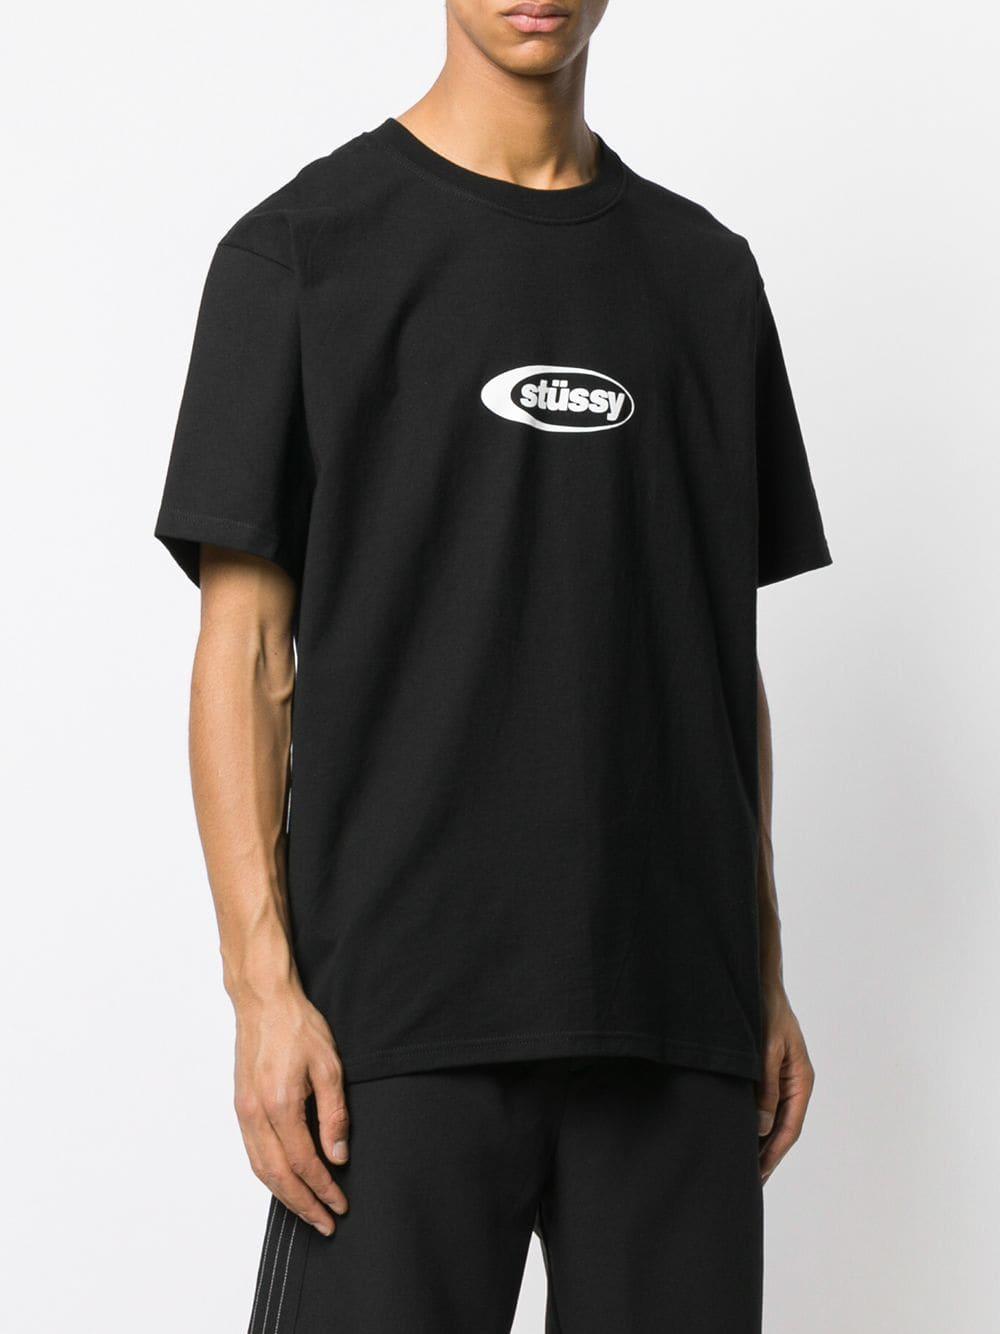 Stussy Logo Round Neck T-shirt in Black for Men - Lyst